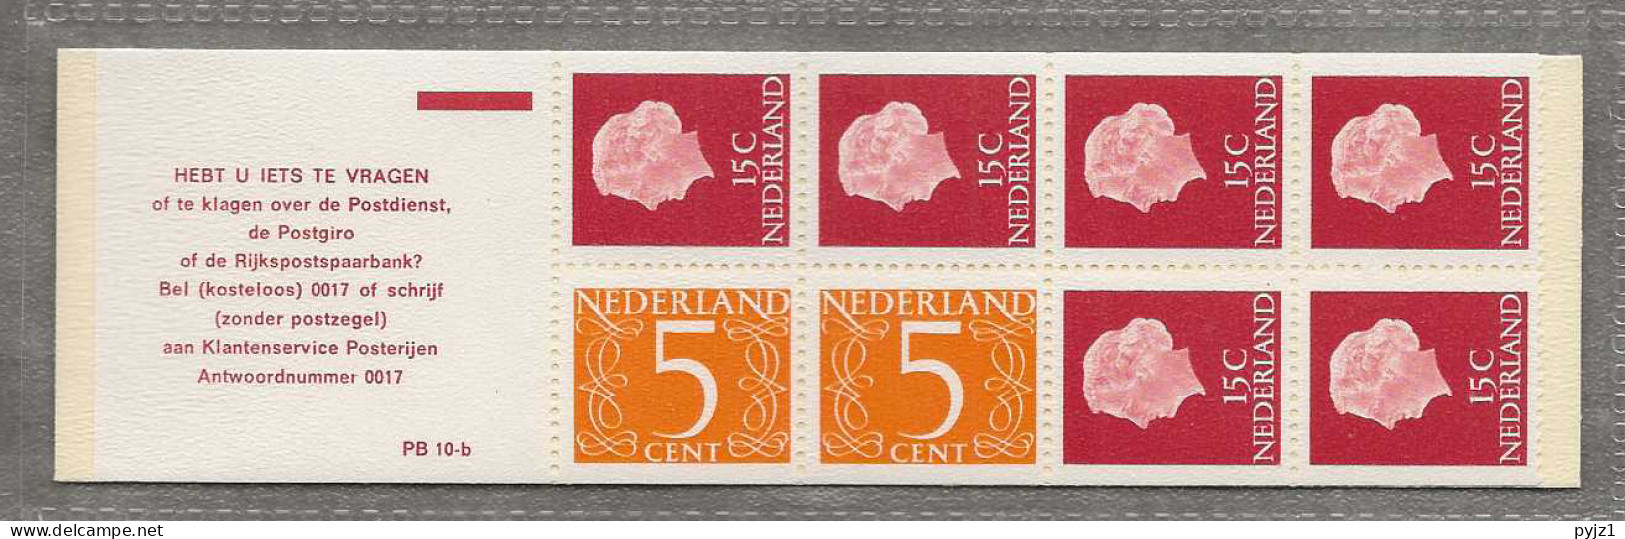 1971 MNH Nederland NVPH PB 10bF - Carnets Et Roulettes